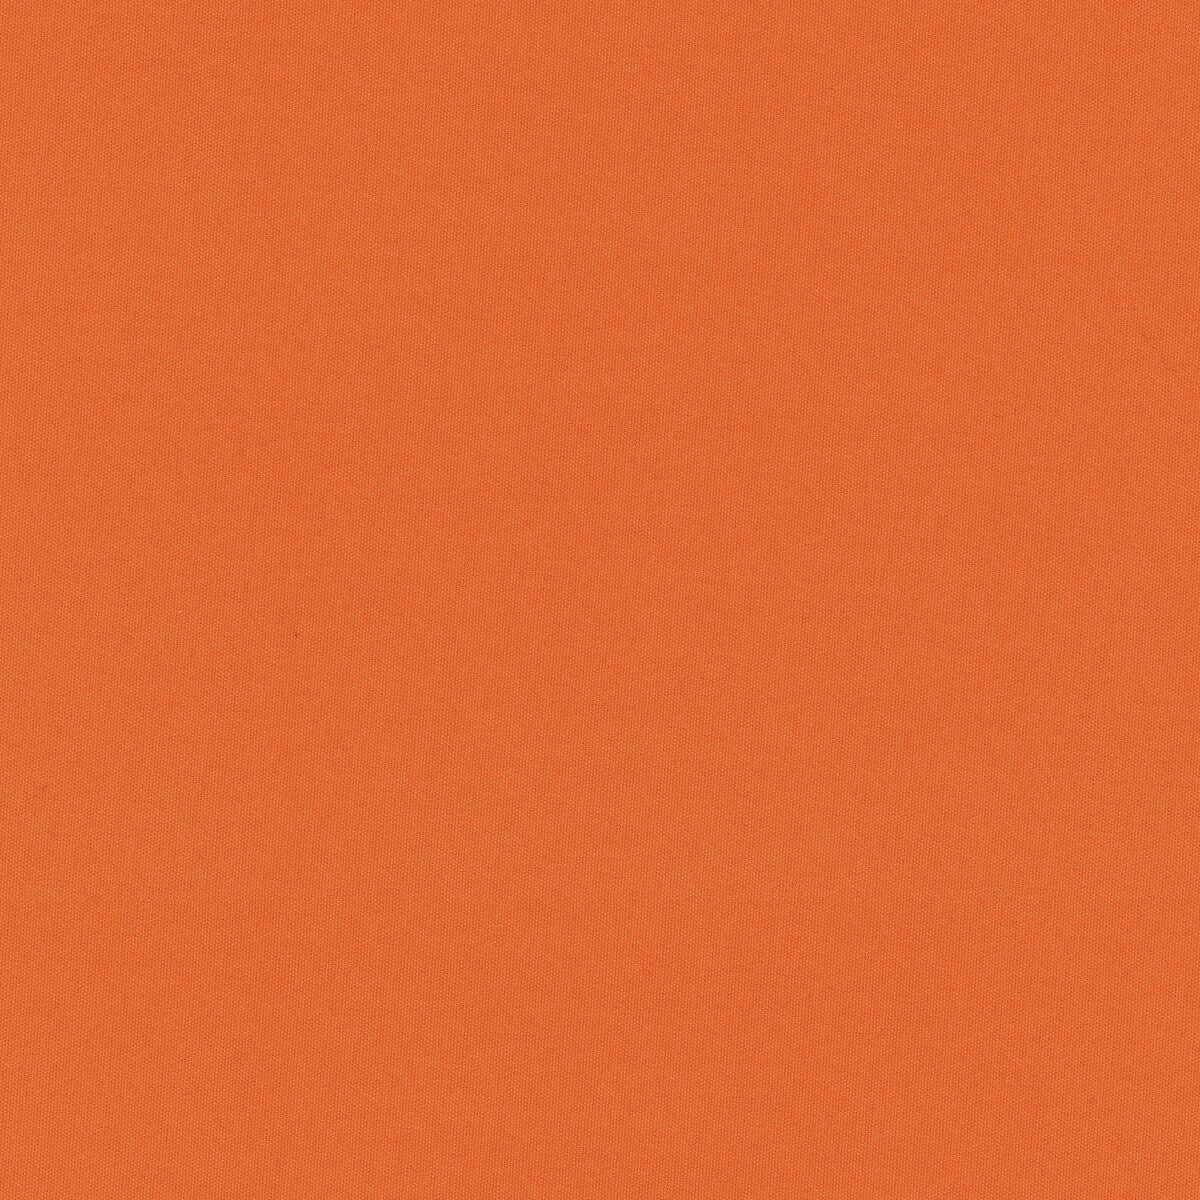 Adrien Cotton fabric in orange color - pattern 8017121.12.0 - by Brunschwig &amp; Fils